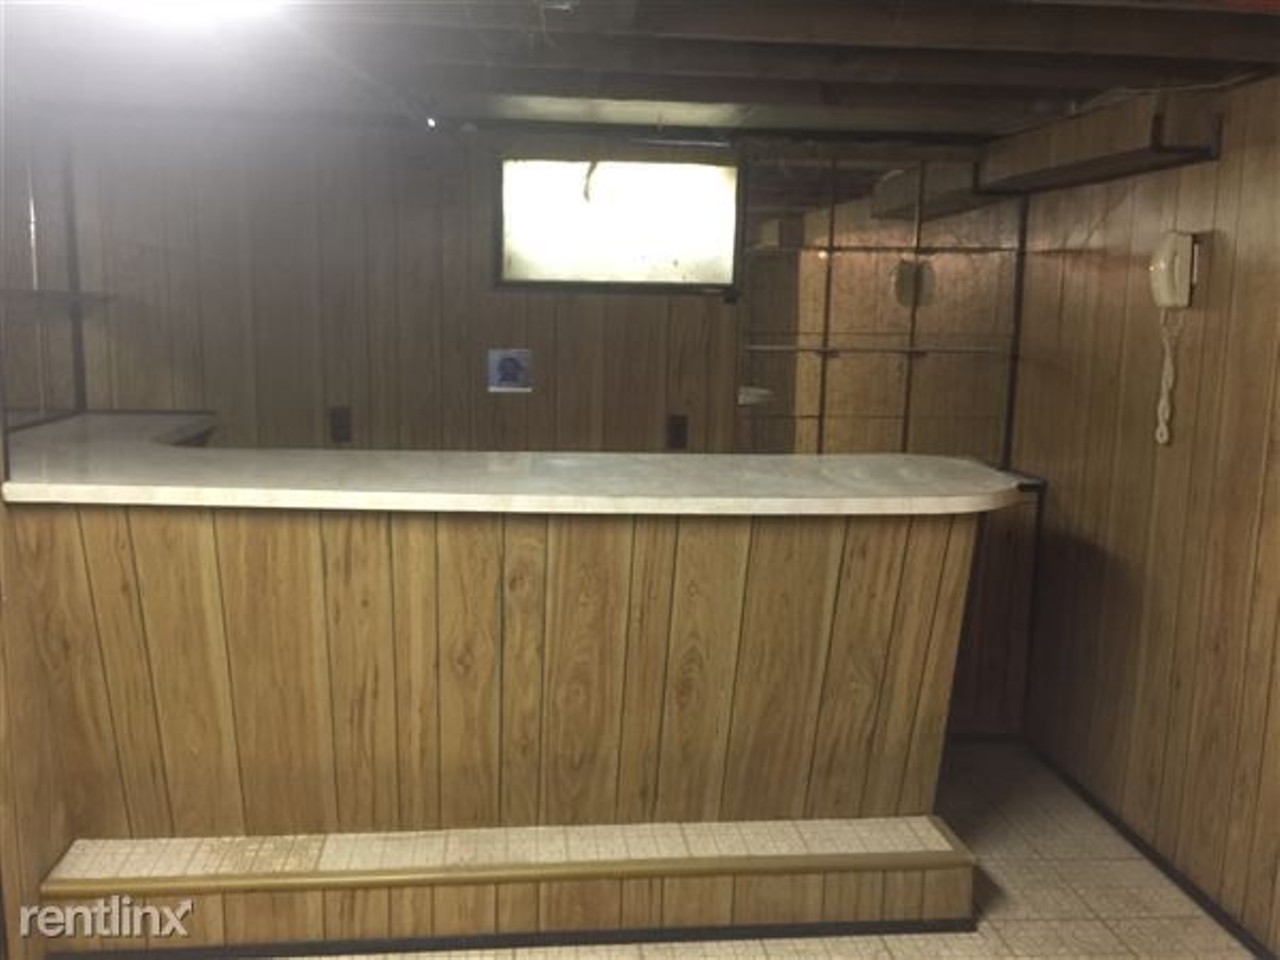 15770 Birwood St
$850/month | 3 bed, 1.5 baths, 1,130 sq. ft.